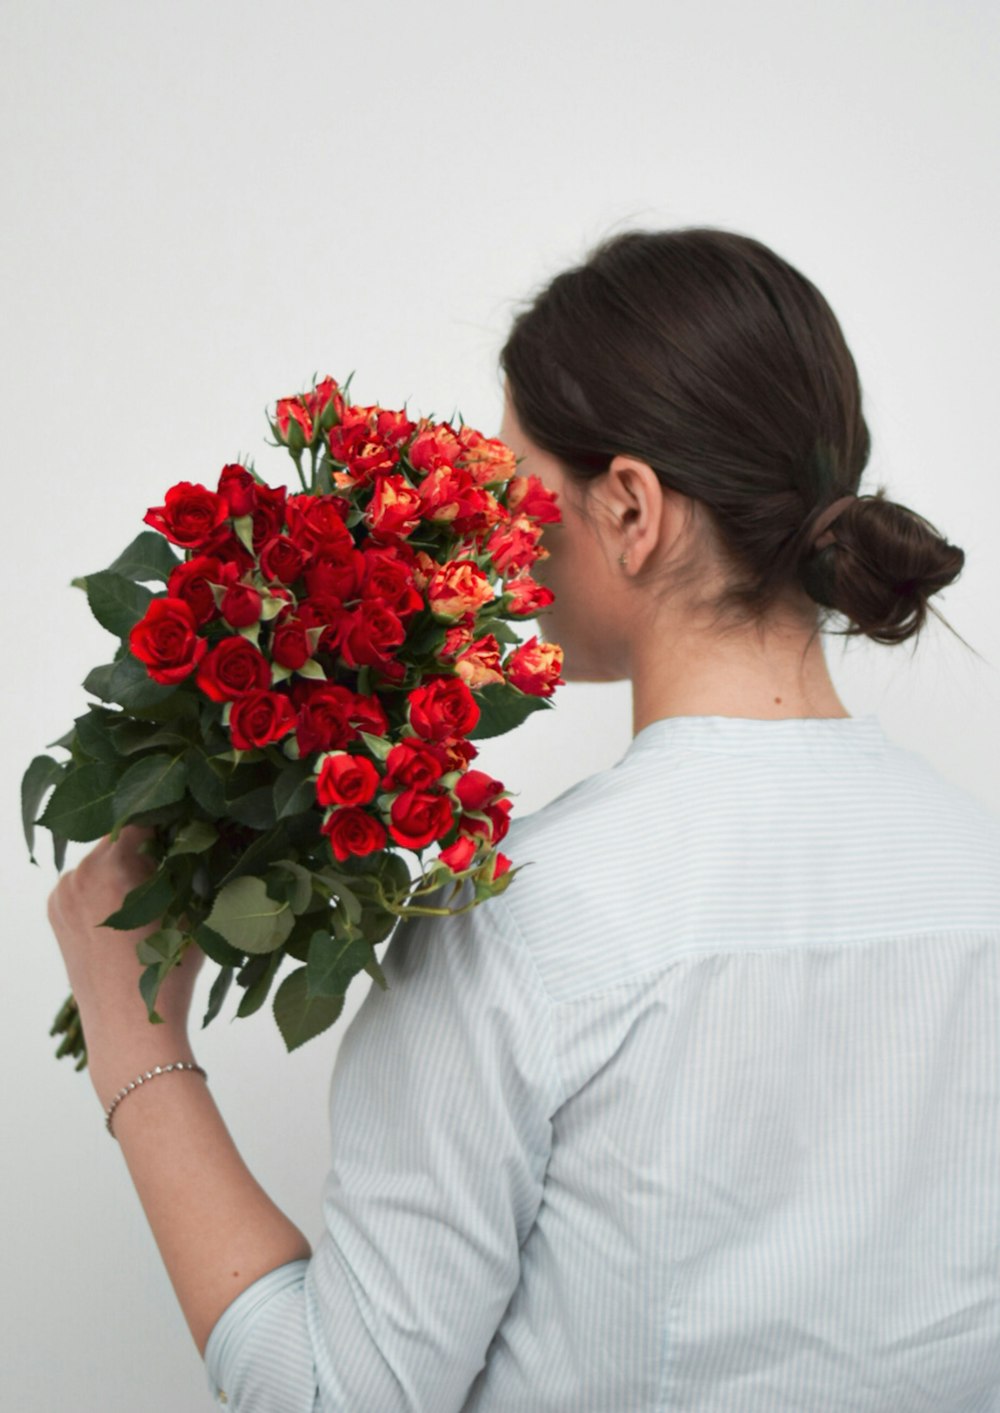 Femme en robe blanche tenant des roses rouges